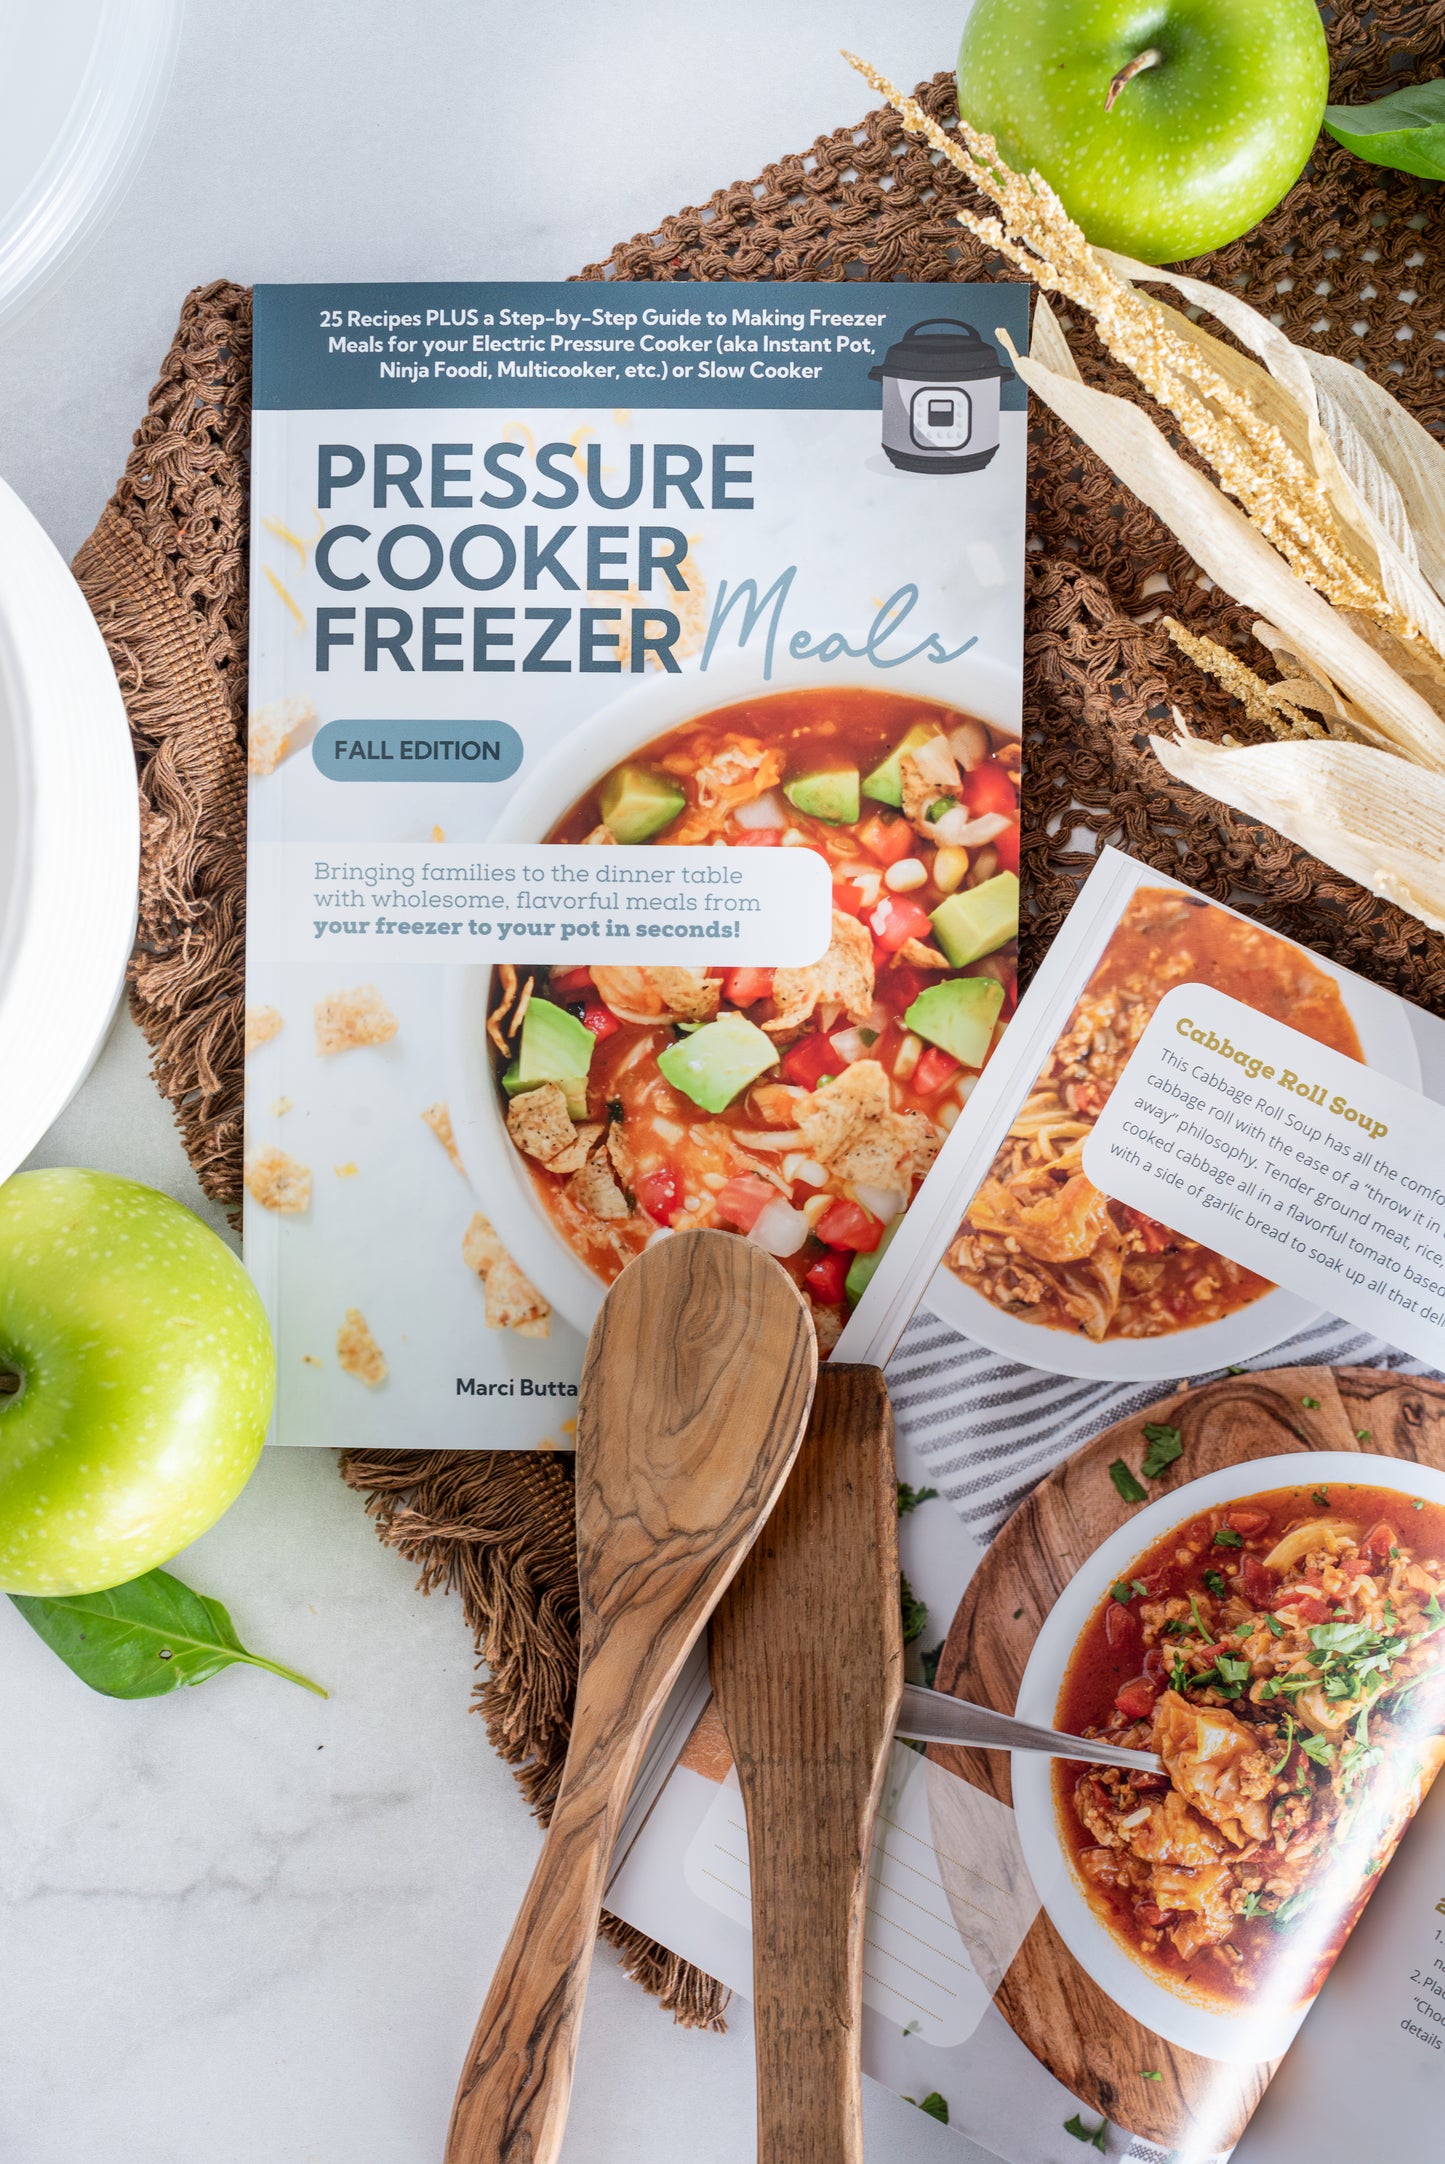 Instant Pot Freezer Meal Cookbook - Fall